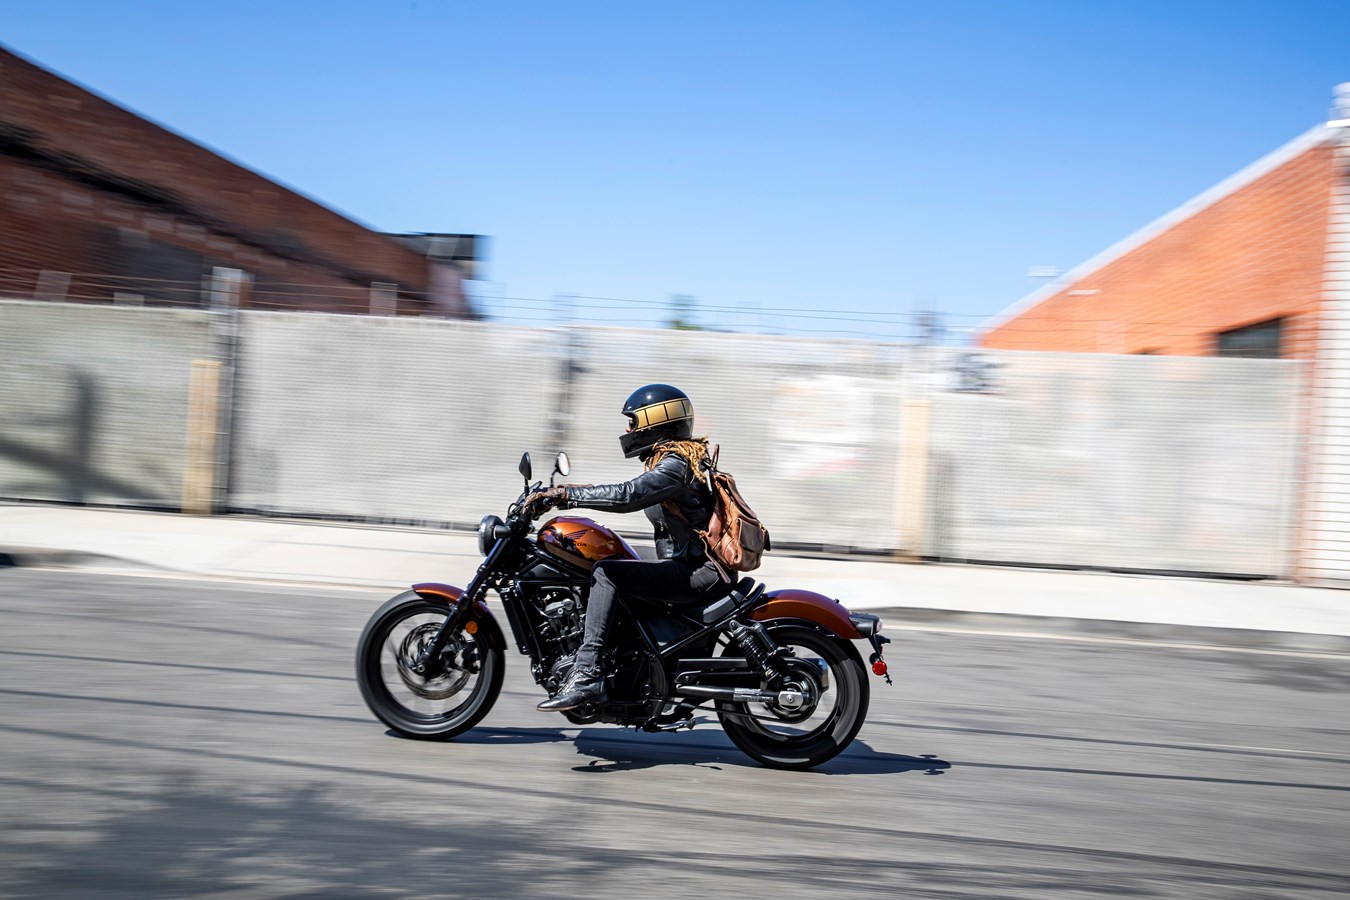 A woman riding a Honda rebel on the street